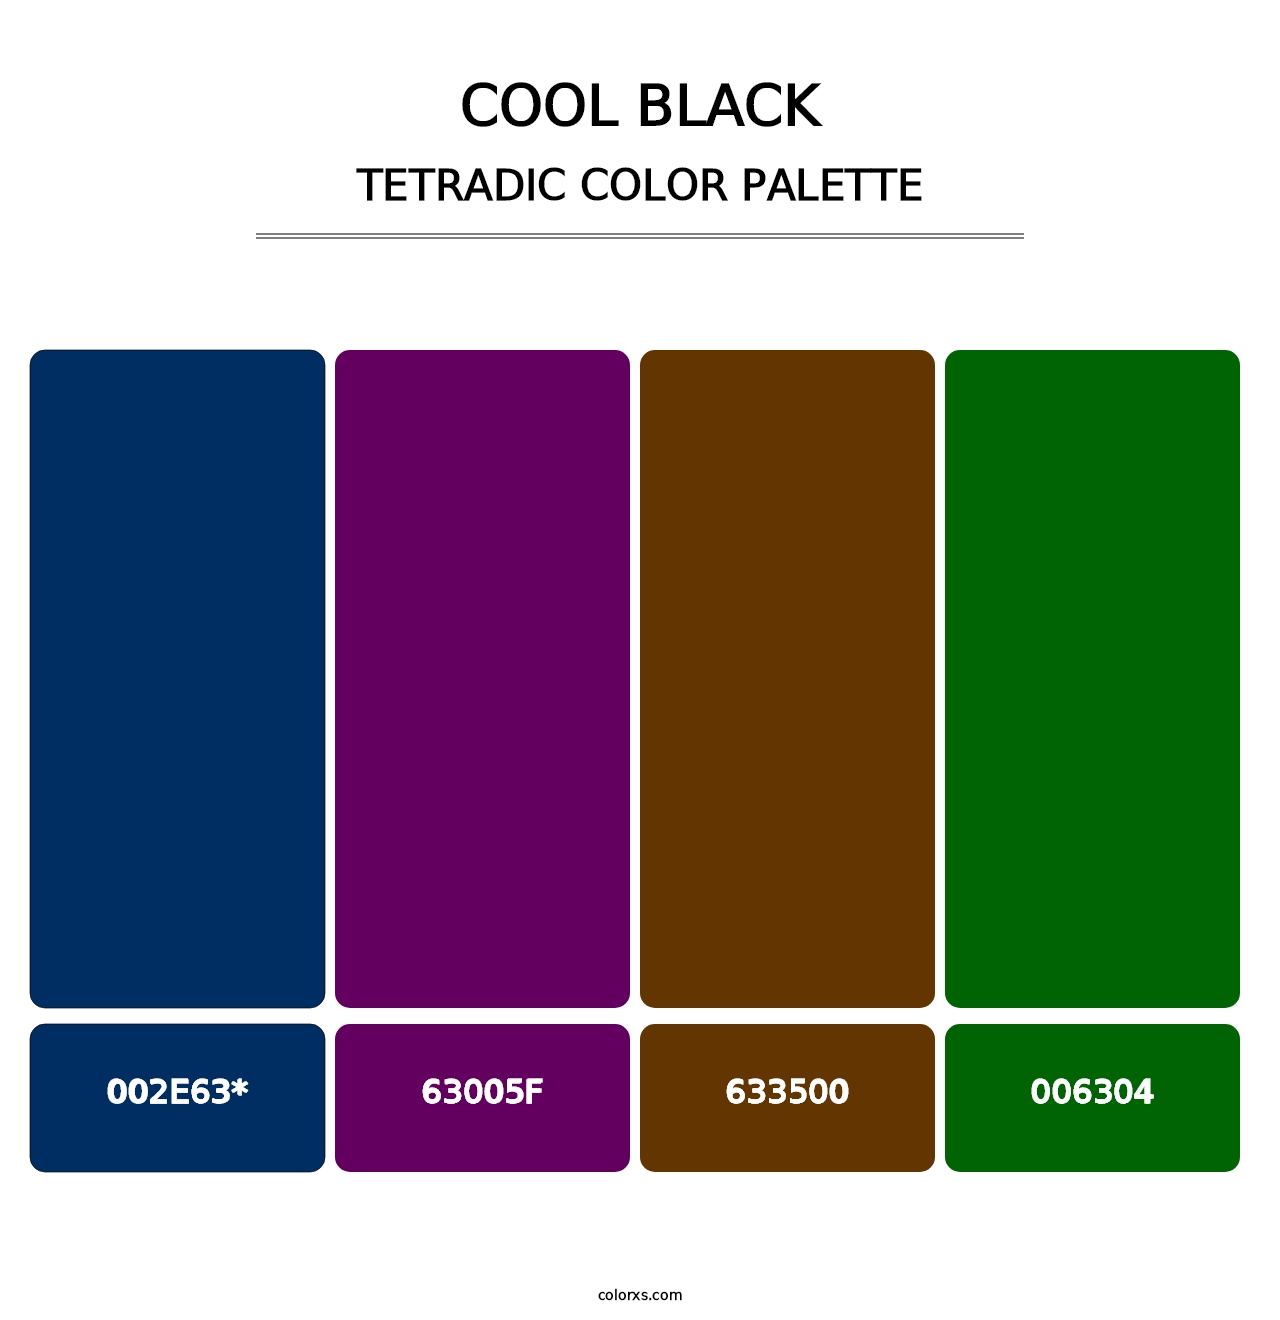 Cool Black - Tetradic Color Palette